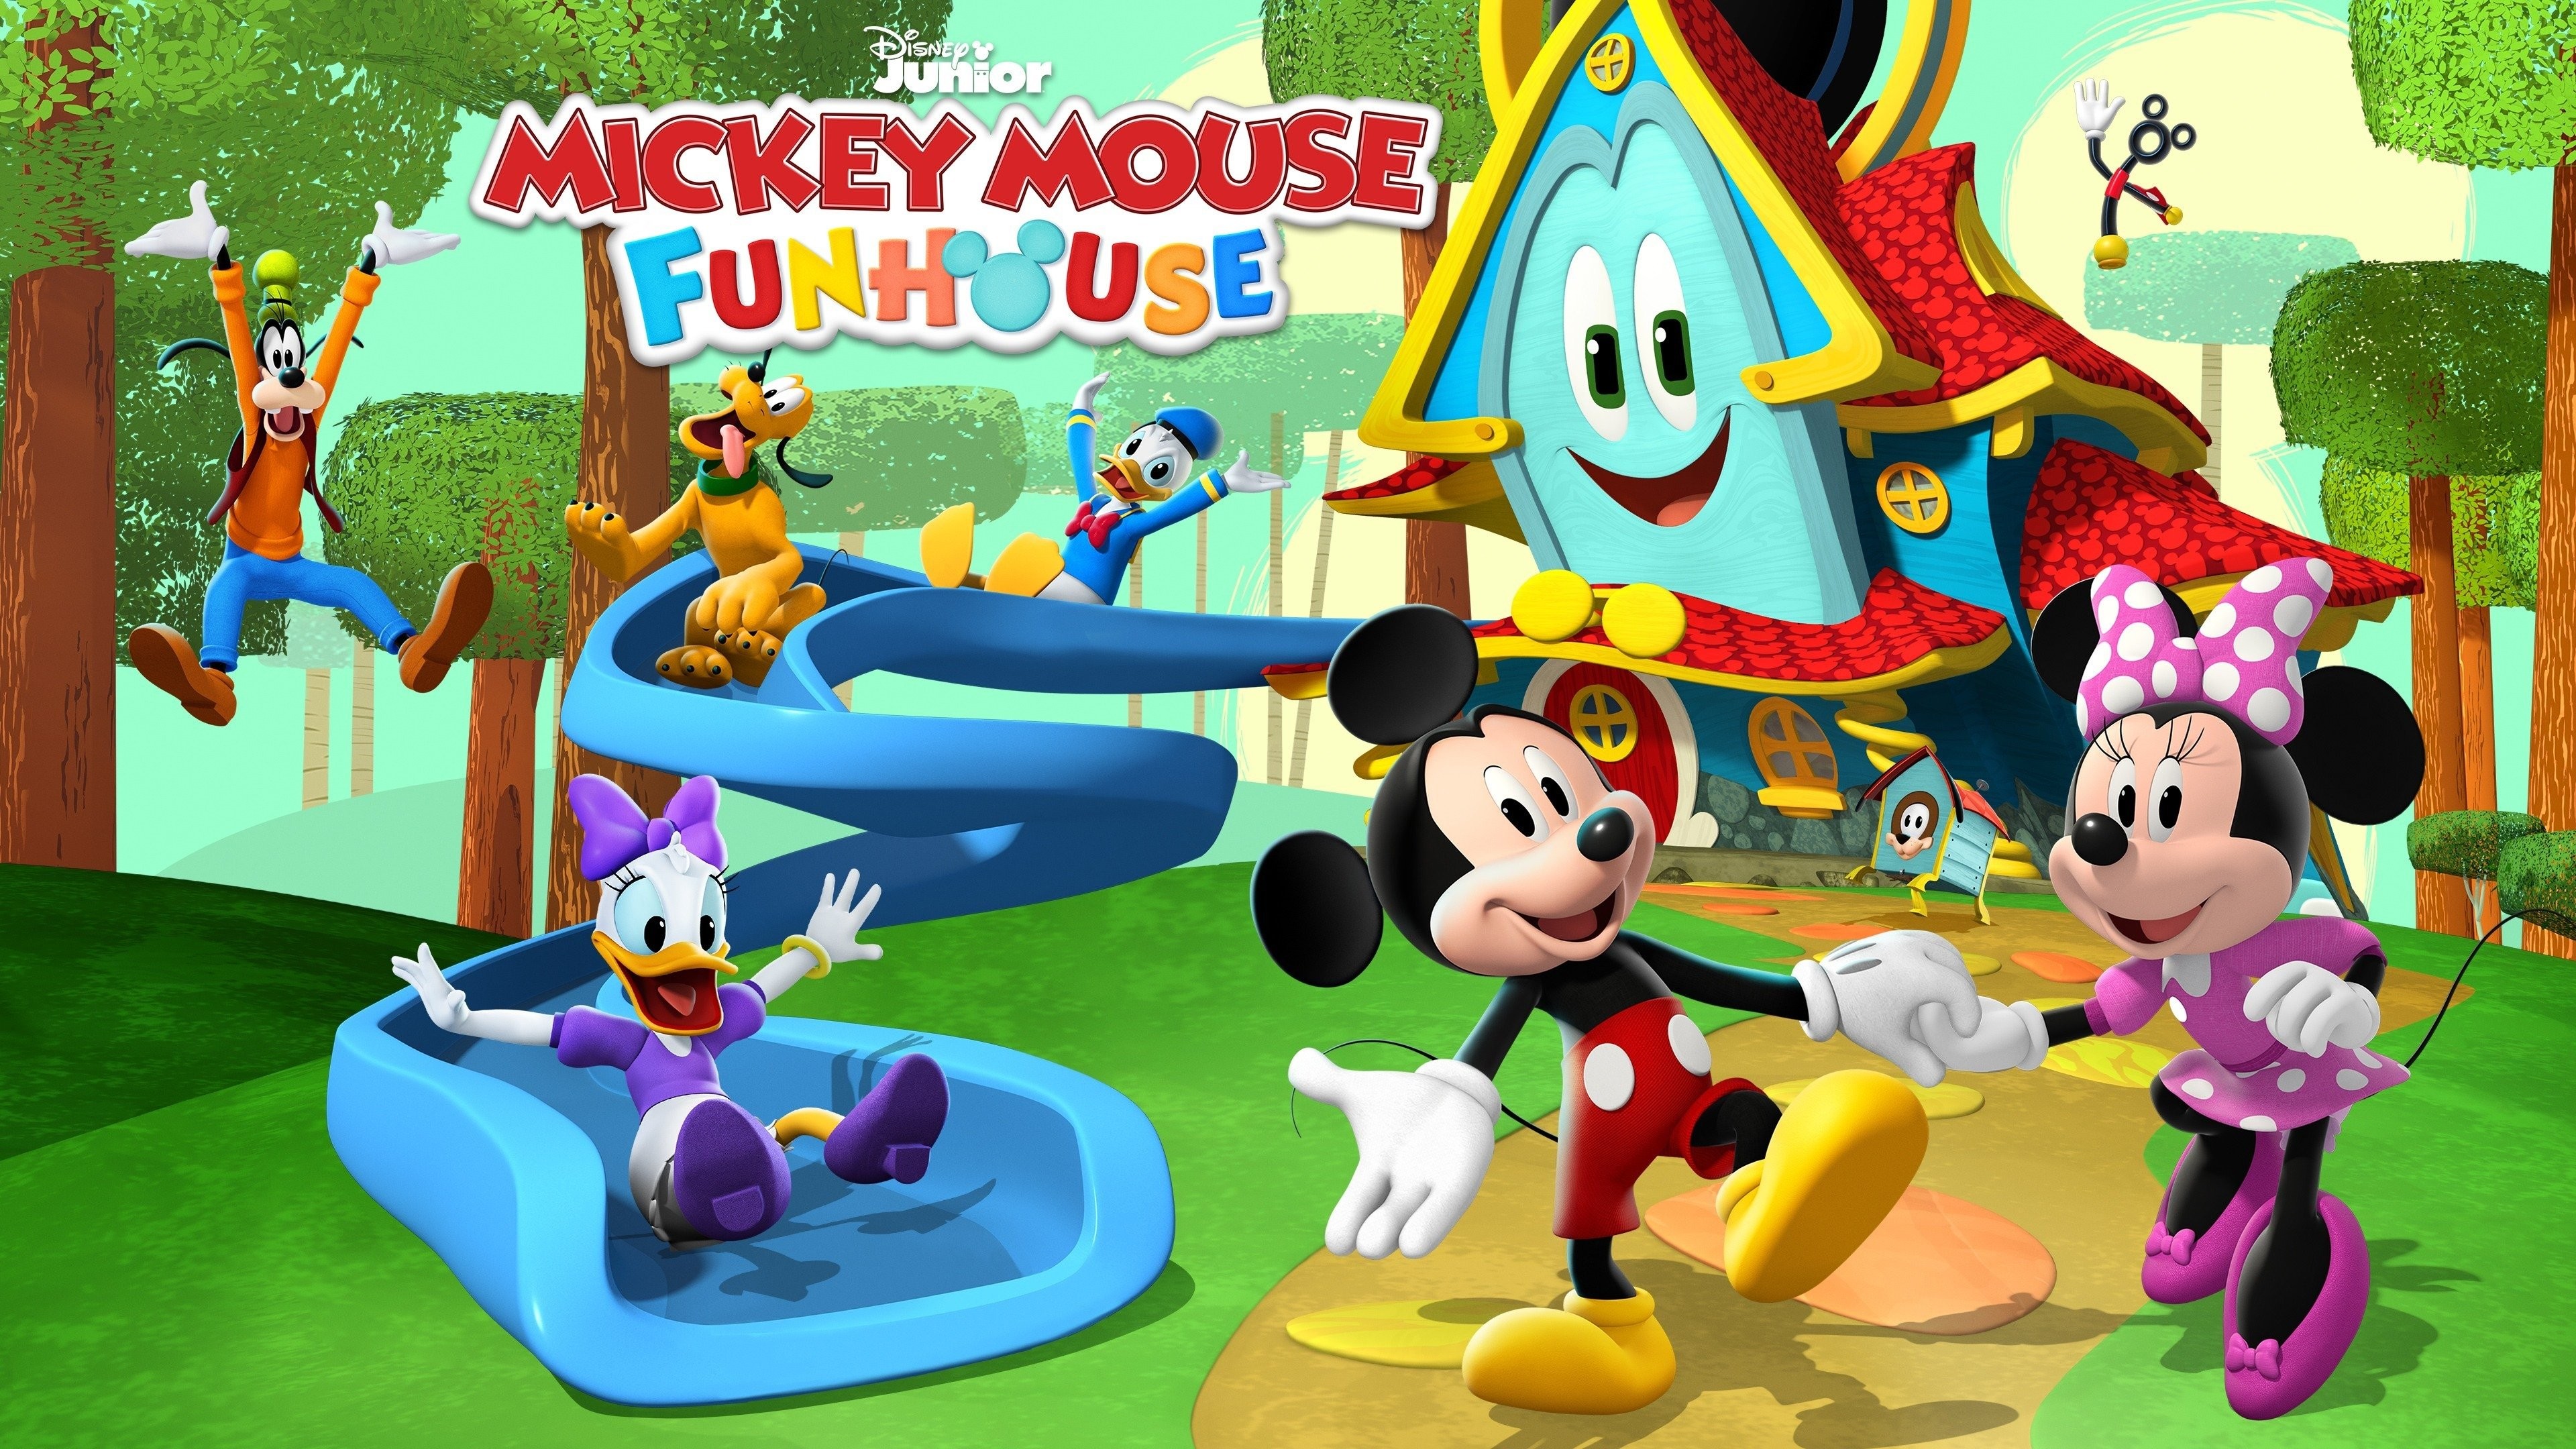 Mickey Mouse Funhouse - Wikipedia